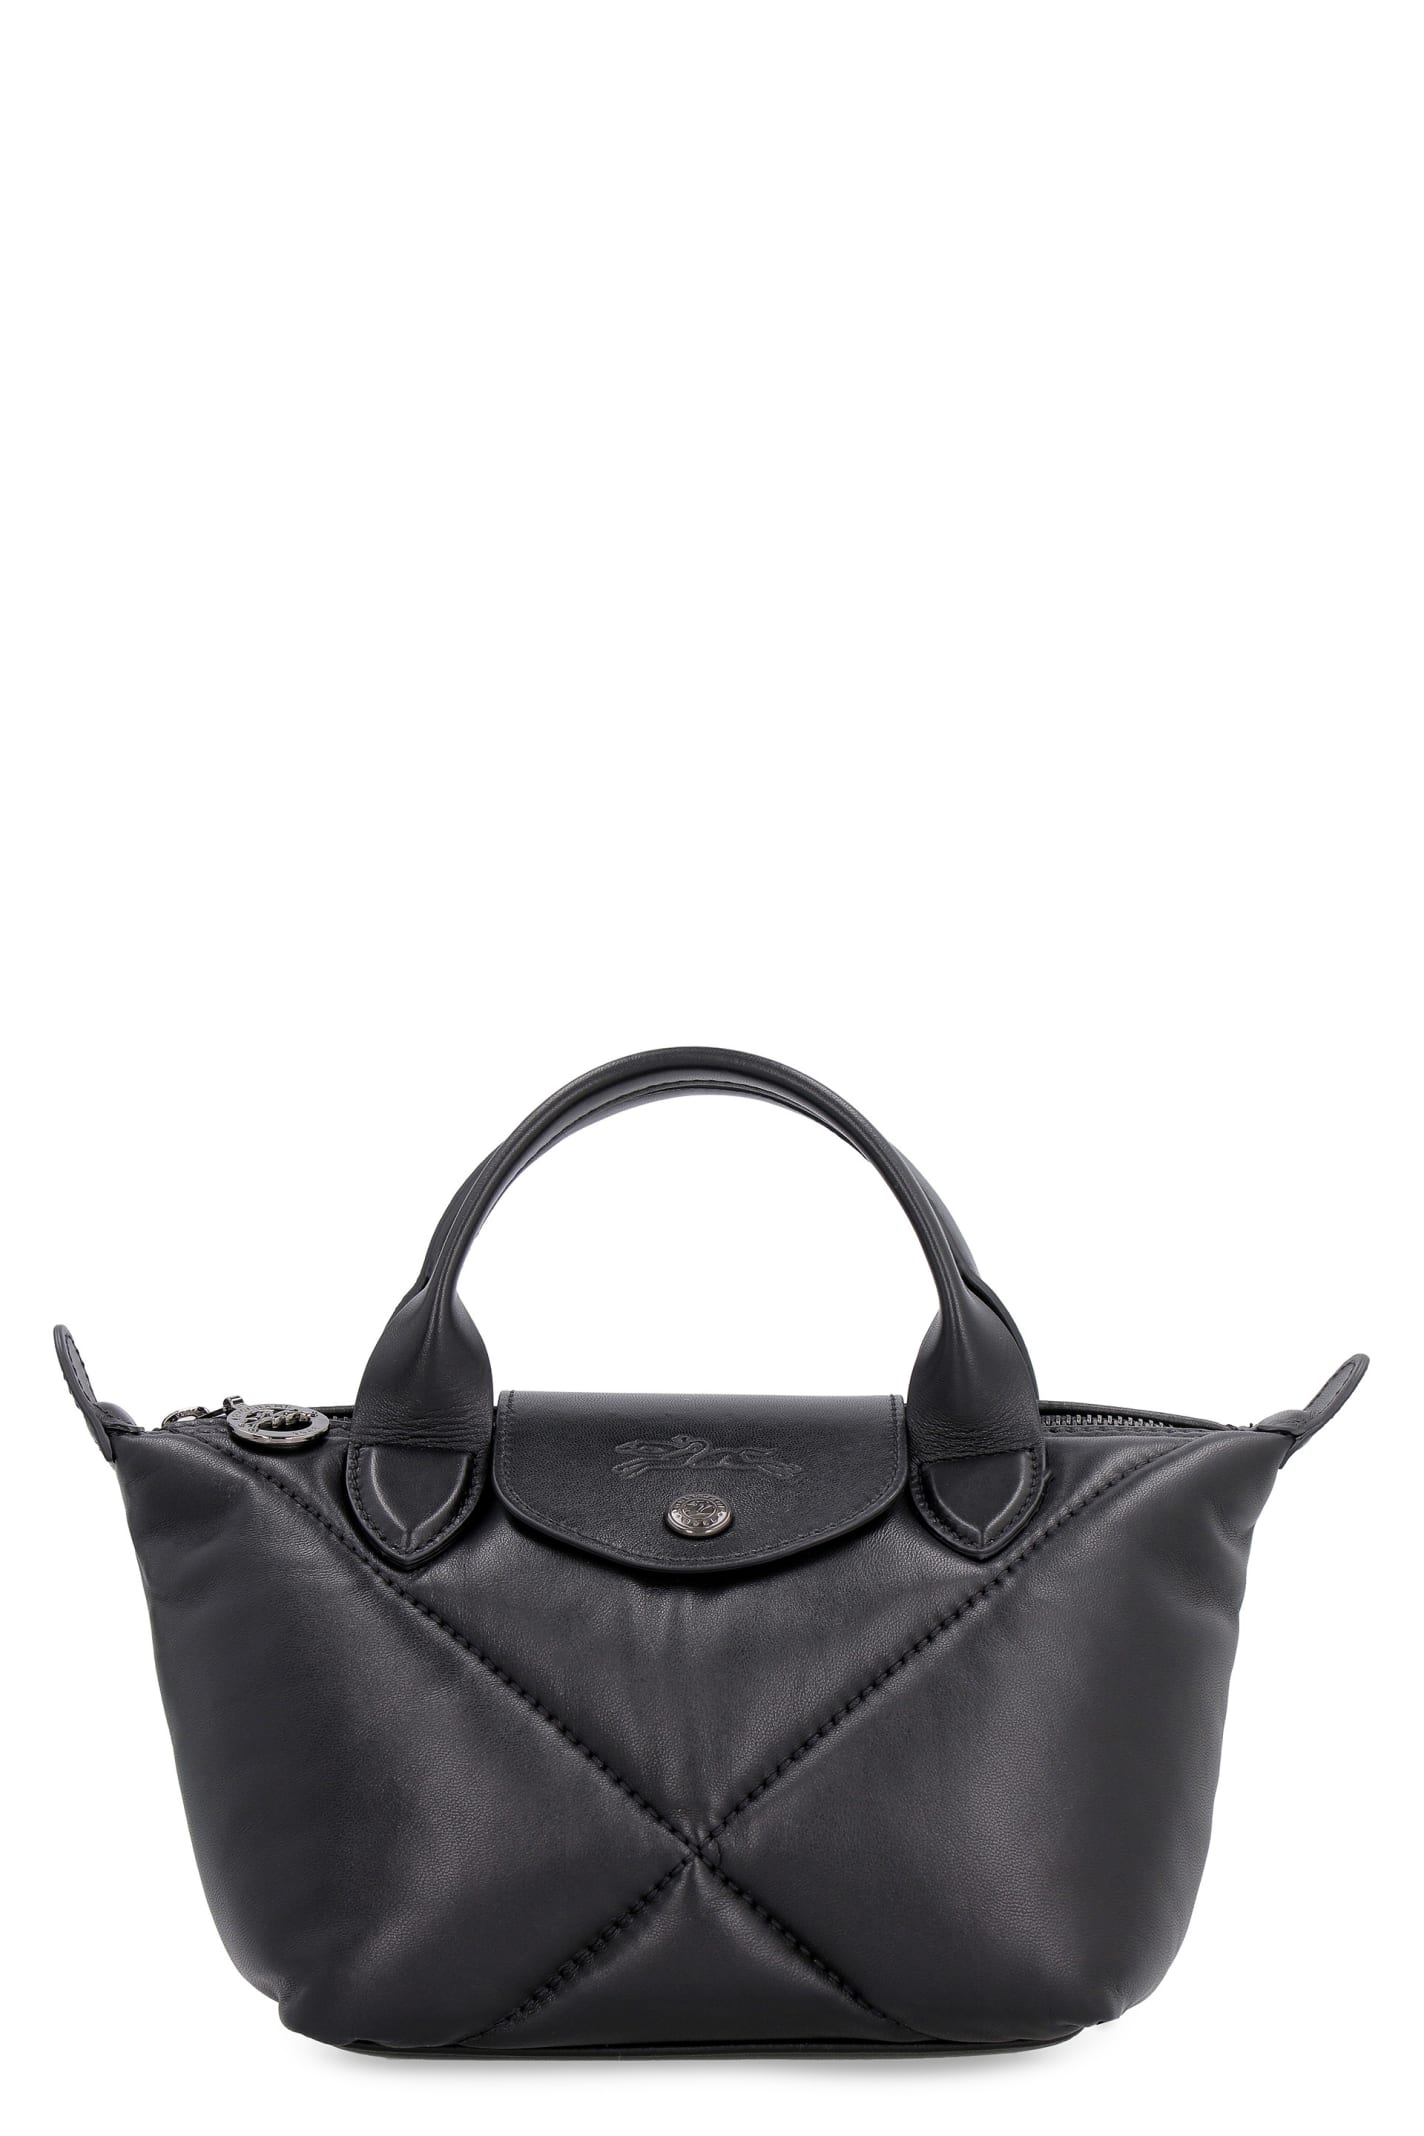 Longchamp Le Piliage Cuir Mini Handbag